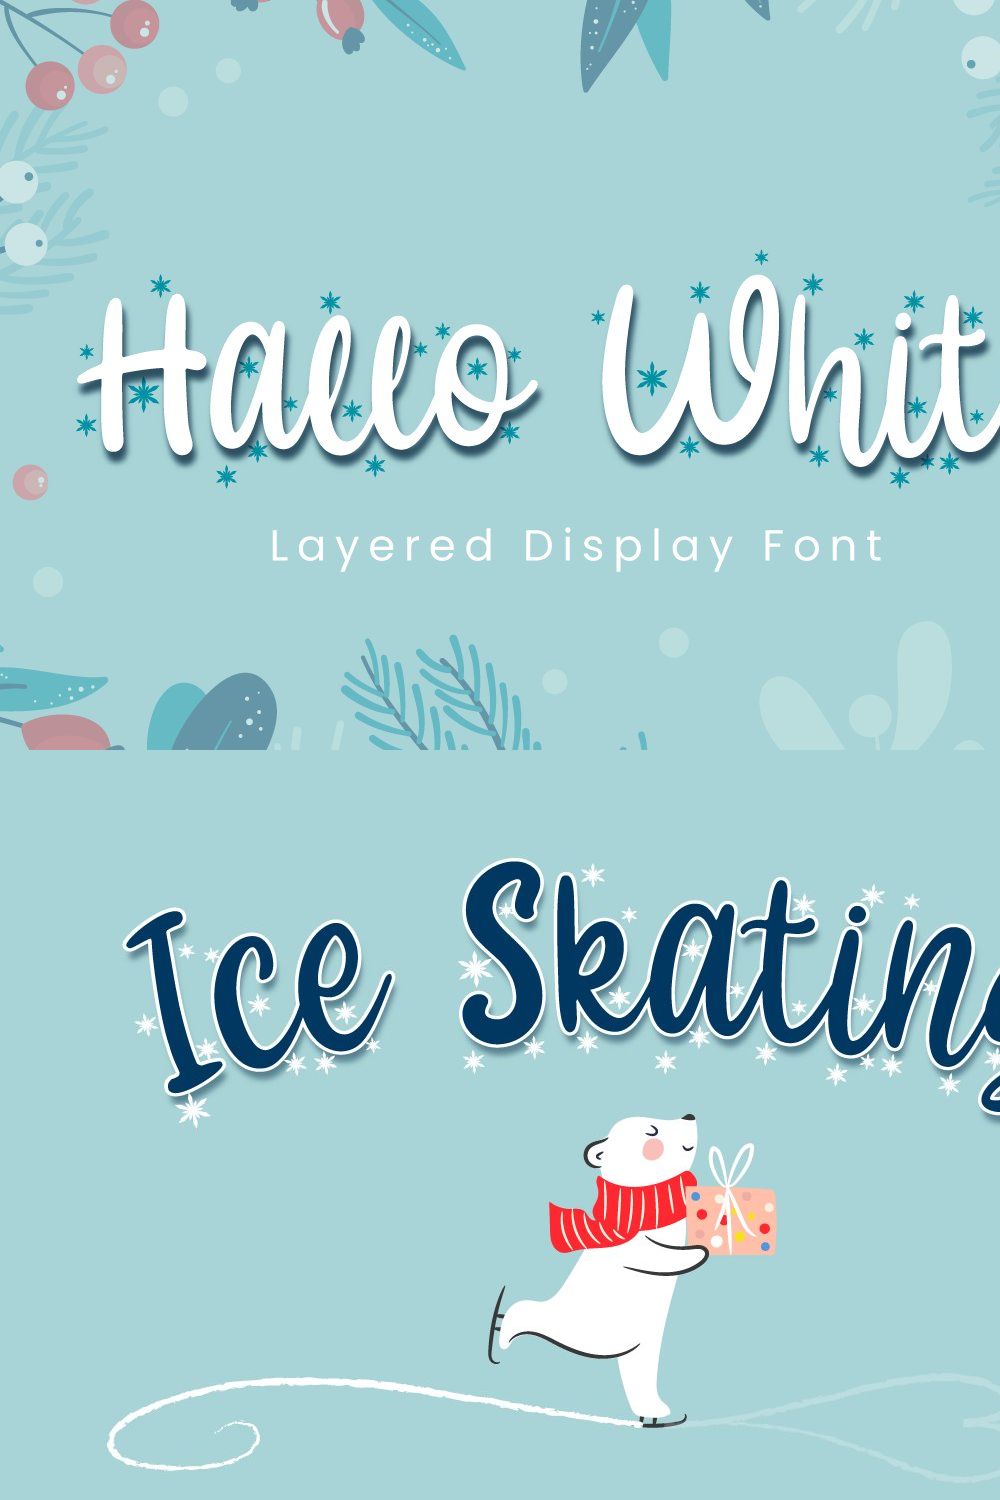 Hallo White - Christmas Font pinterest preview image.